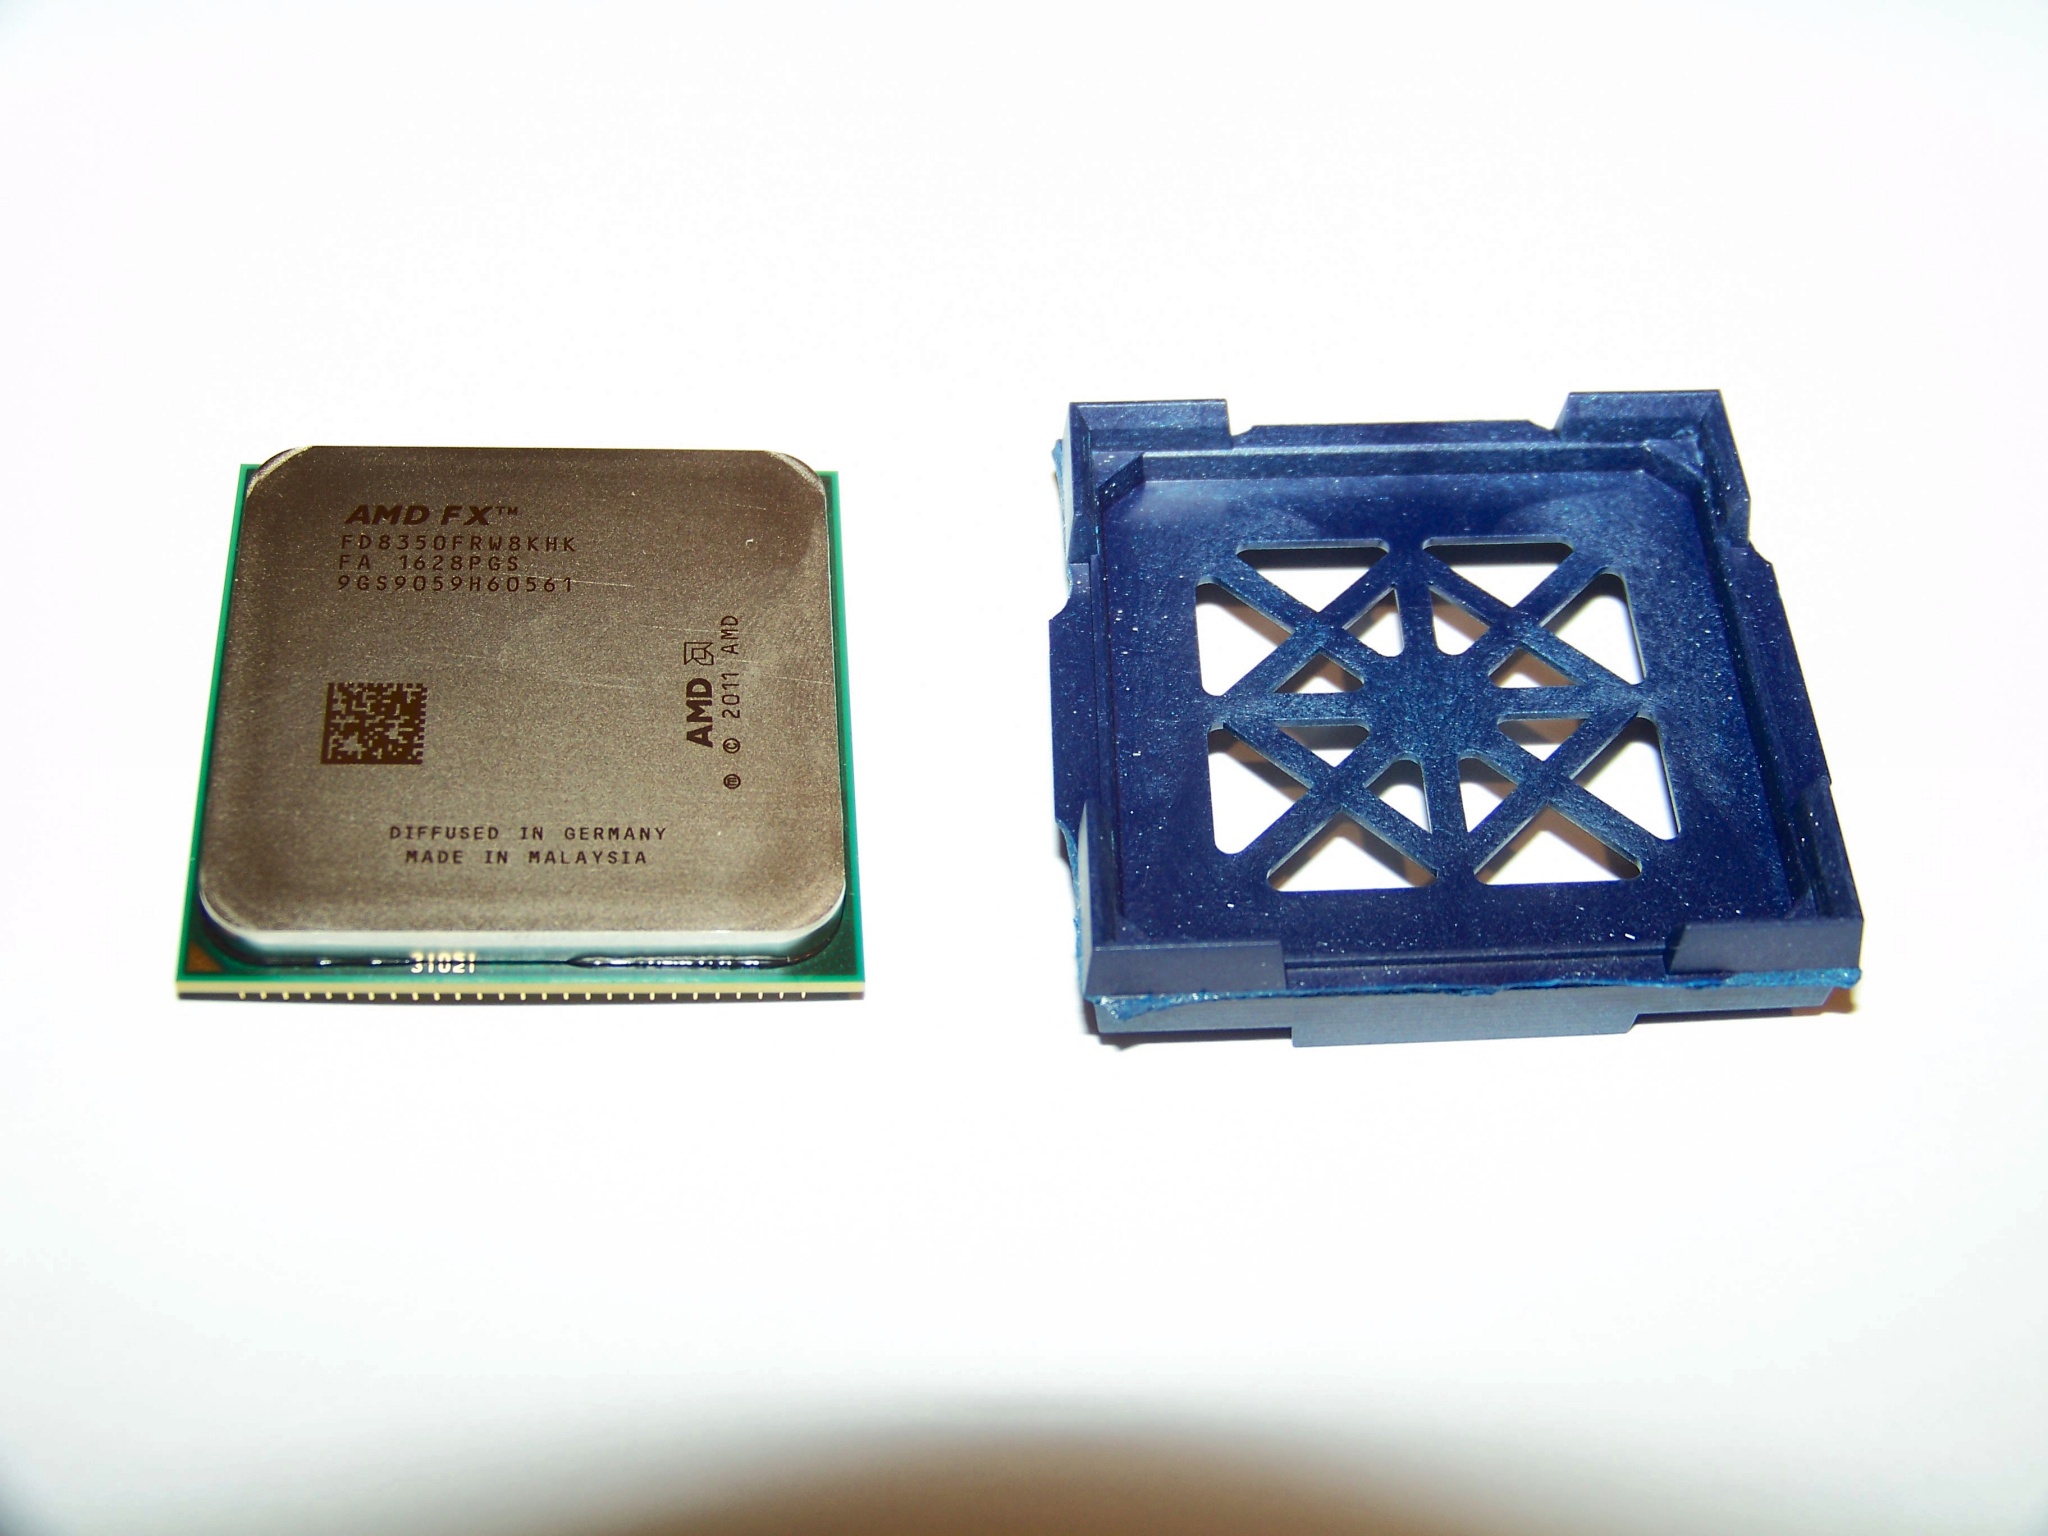 Amd fx 8350 цена. Процессор AMD FX-8350, OEM. Процессор AMD FX-8350 Vishera. Процессор АМД ФХ 8350 ОЕМ. Процессор AMD FX TM 8350 eight-Core Processor.